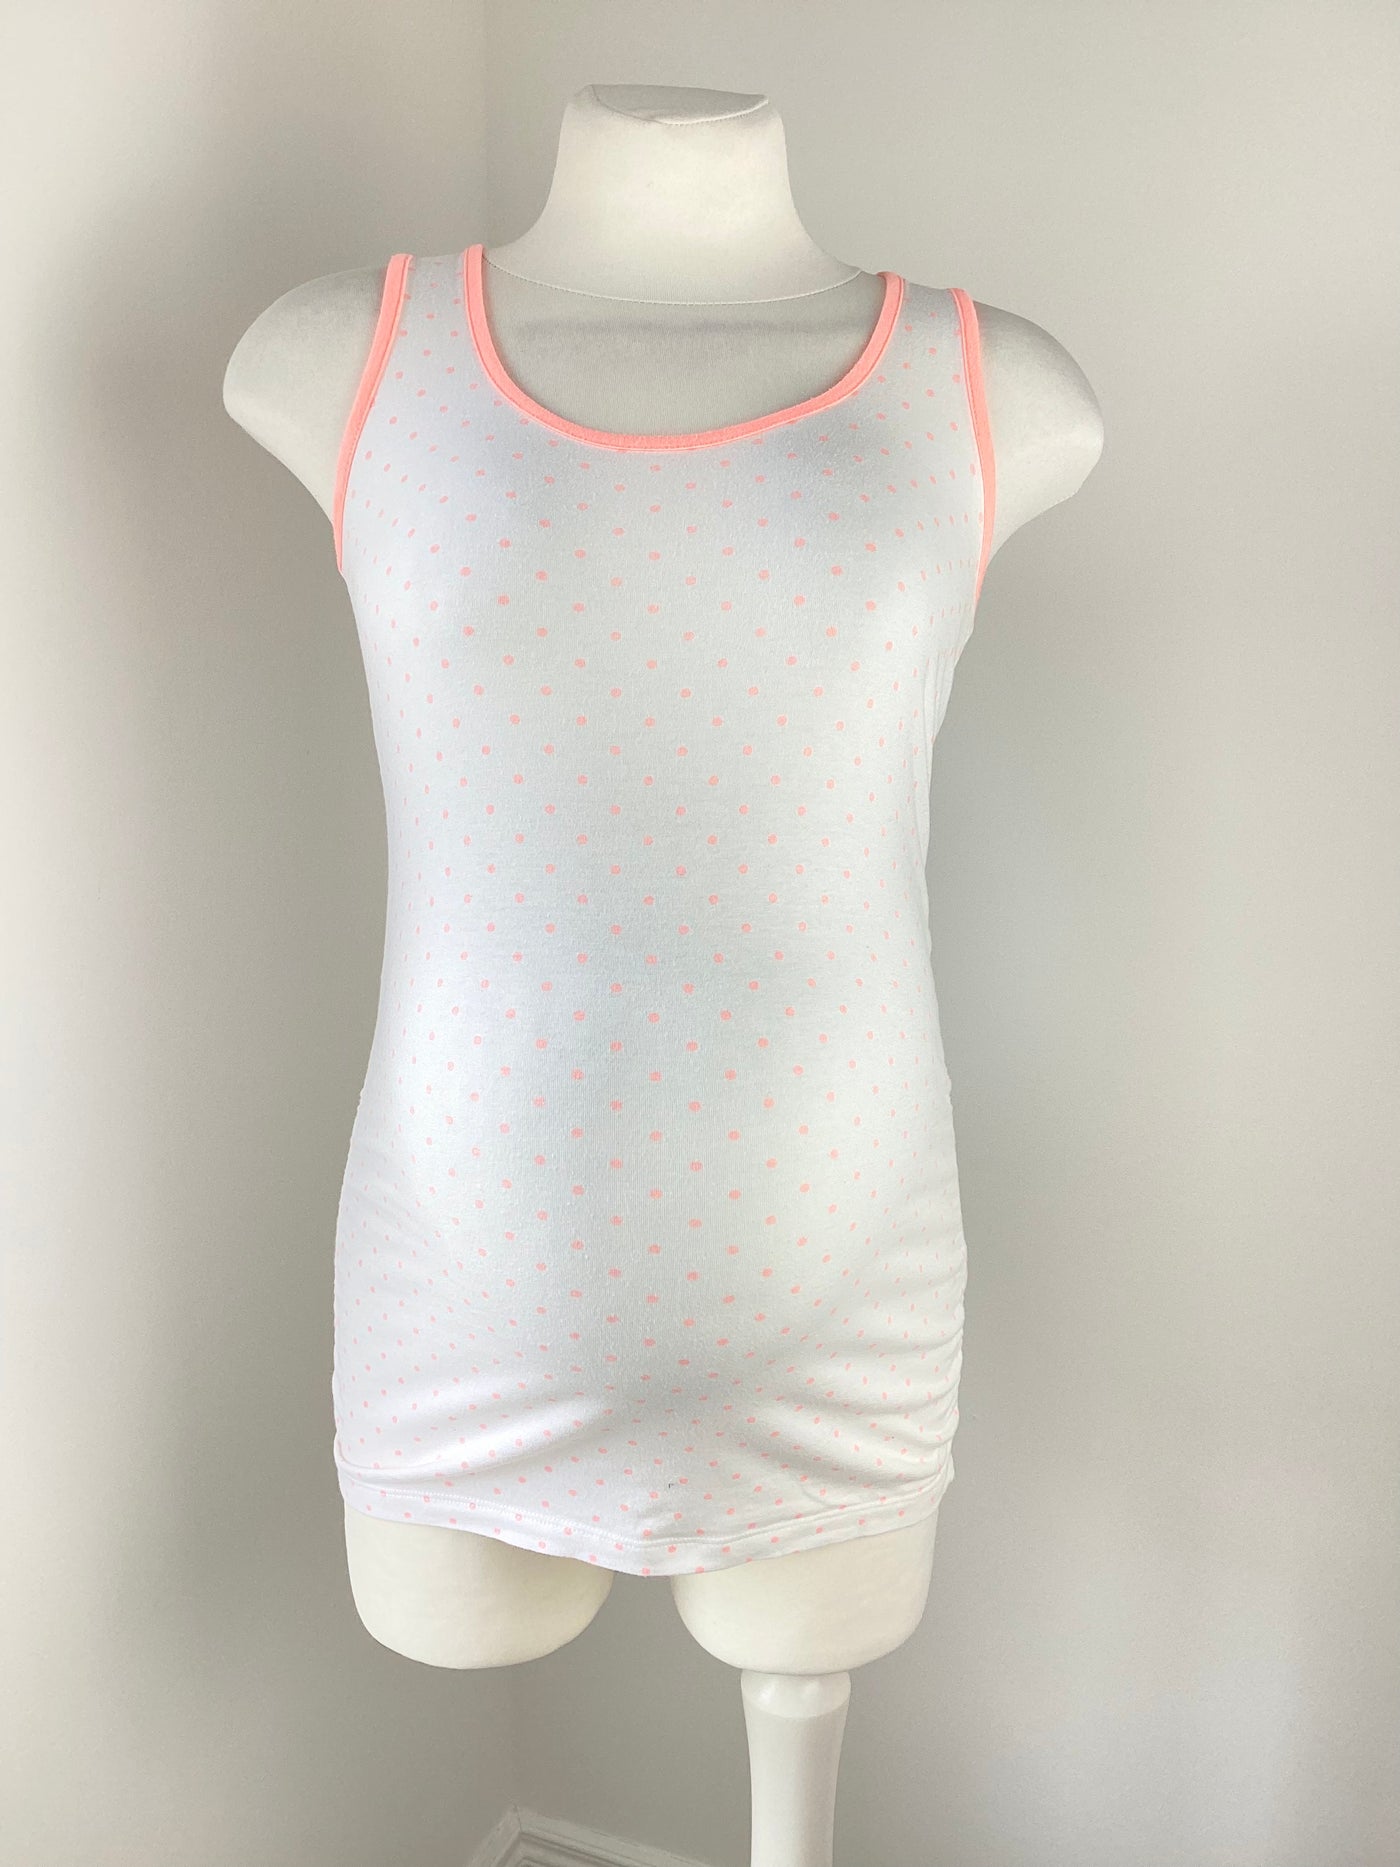 Blooming Marvellous white & neon orange polkadot sleeveless top - Size S (Approx UK 8/10)